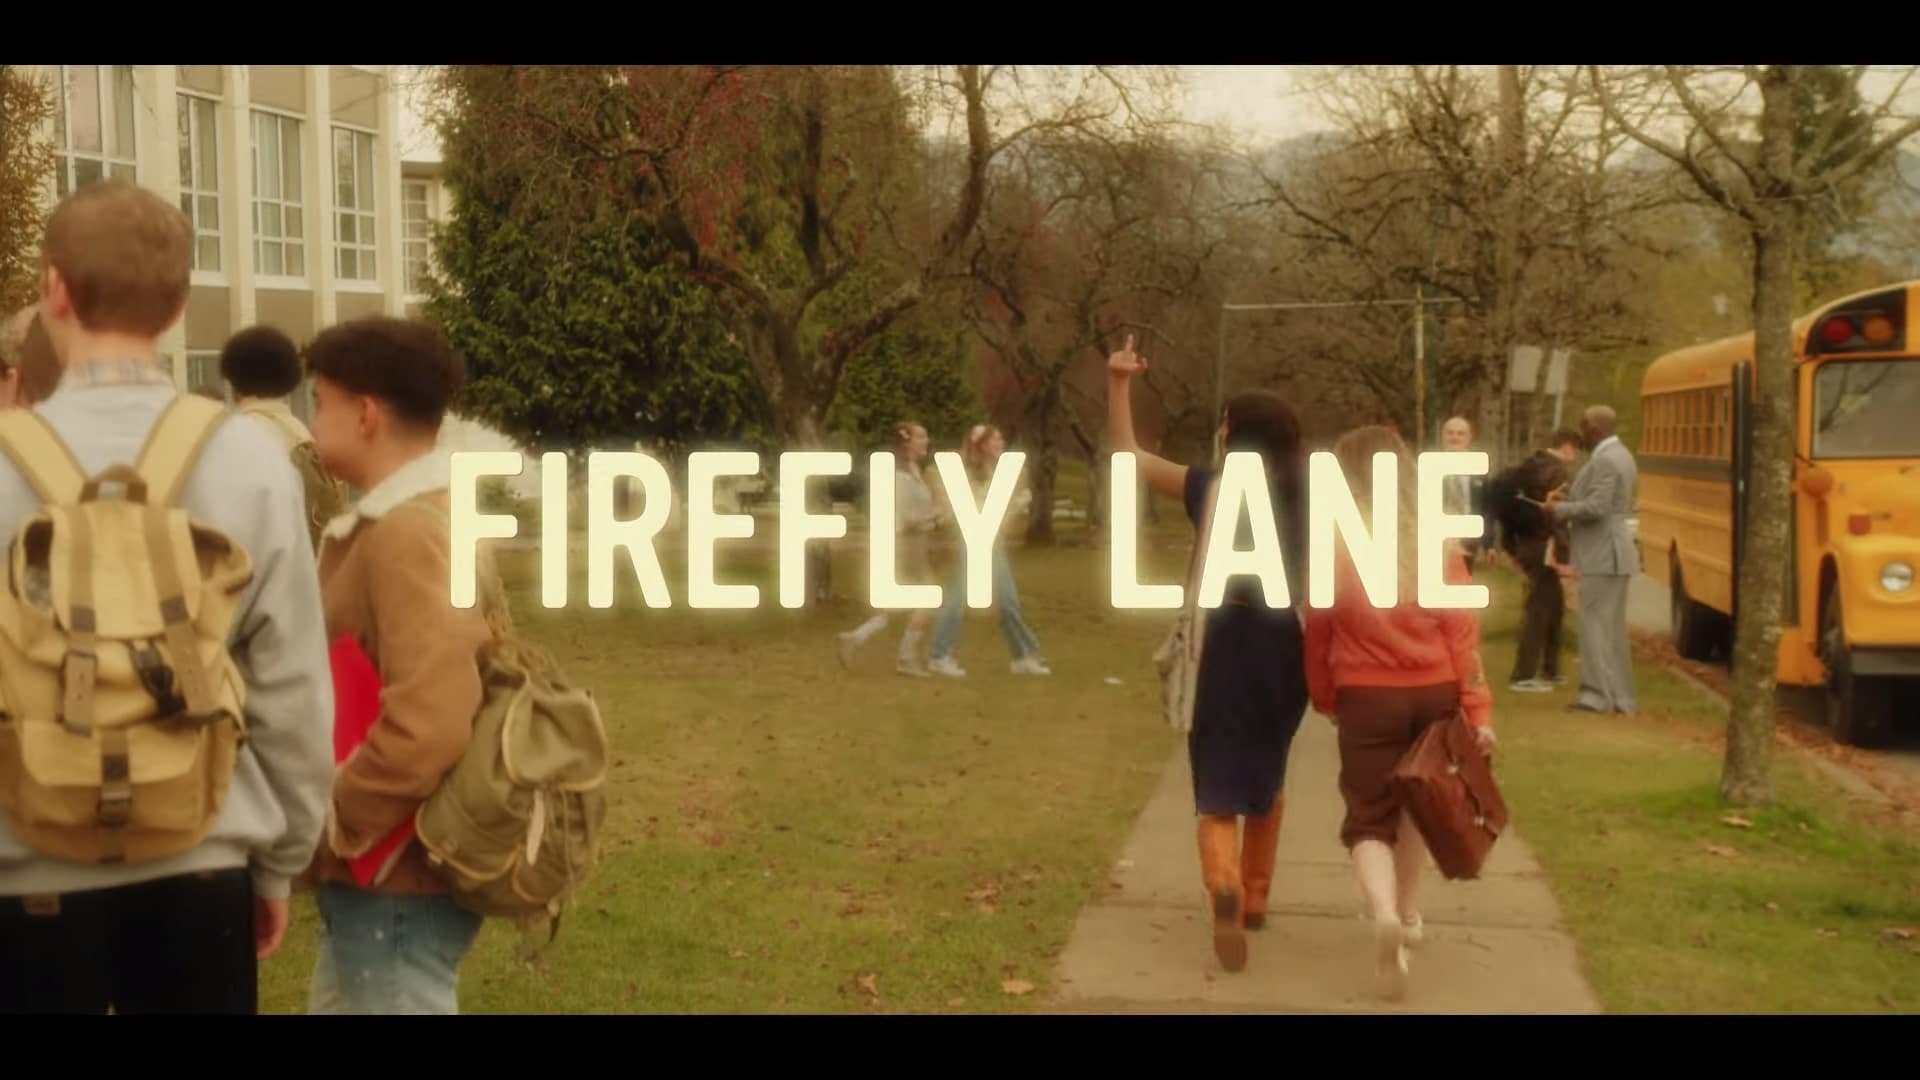 🎬 Firefly Lane [TRAILER] Coming to Netflix February 3, 2021 1